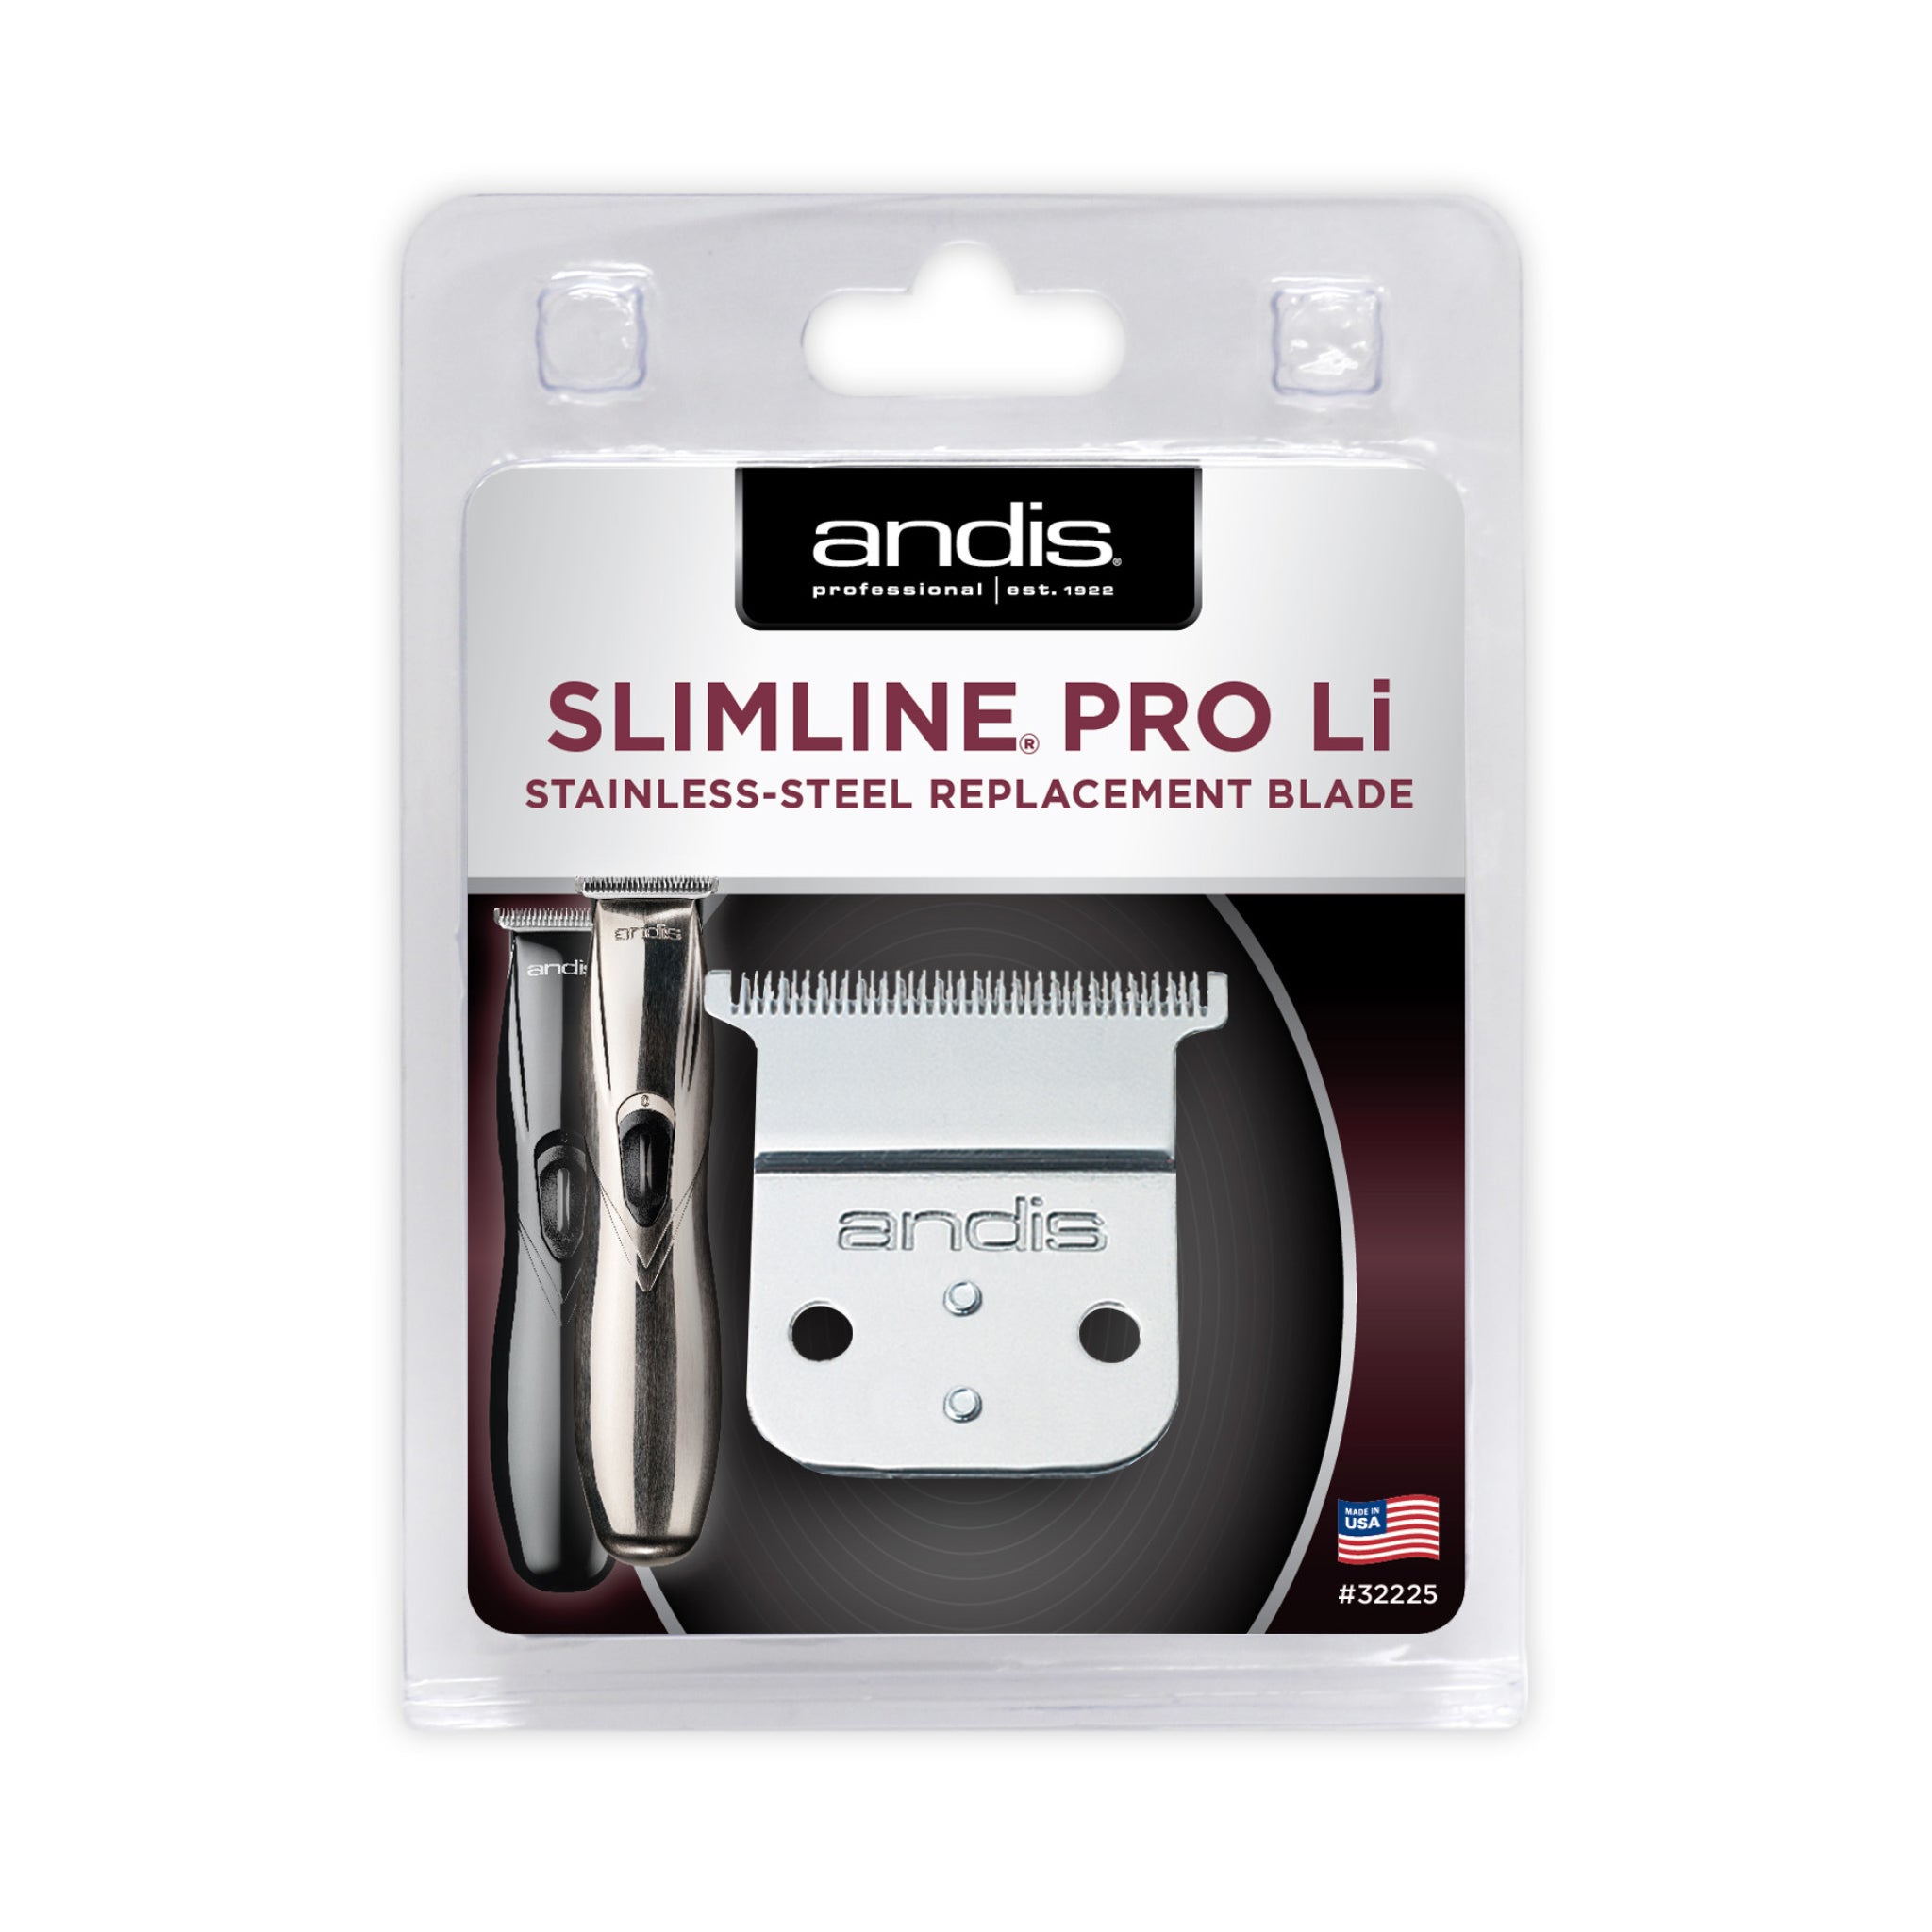 Slimline Pro Li Stainless Steel Replacement Blade